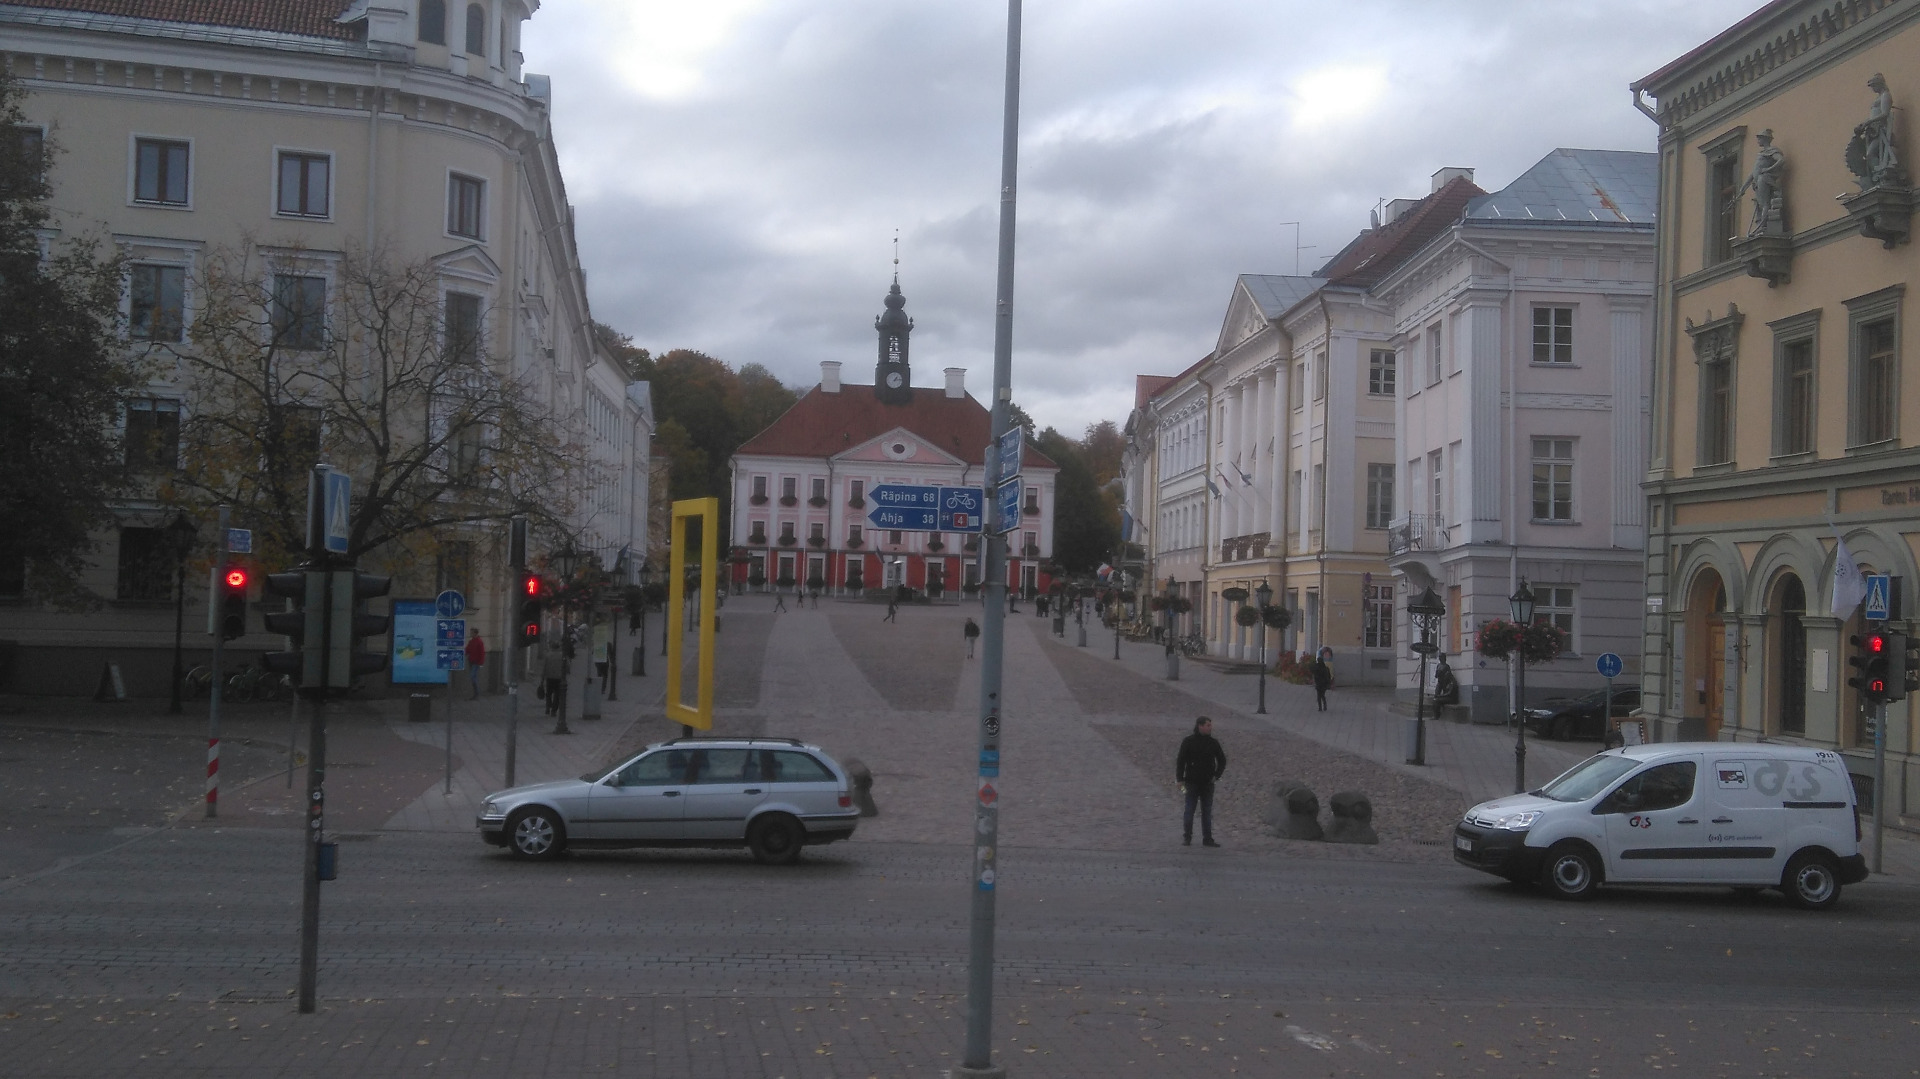 Raekoja Square in Tartu rephoto